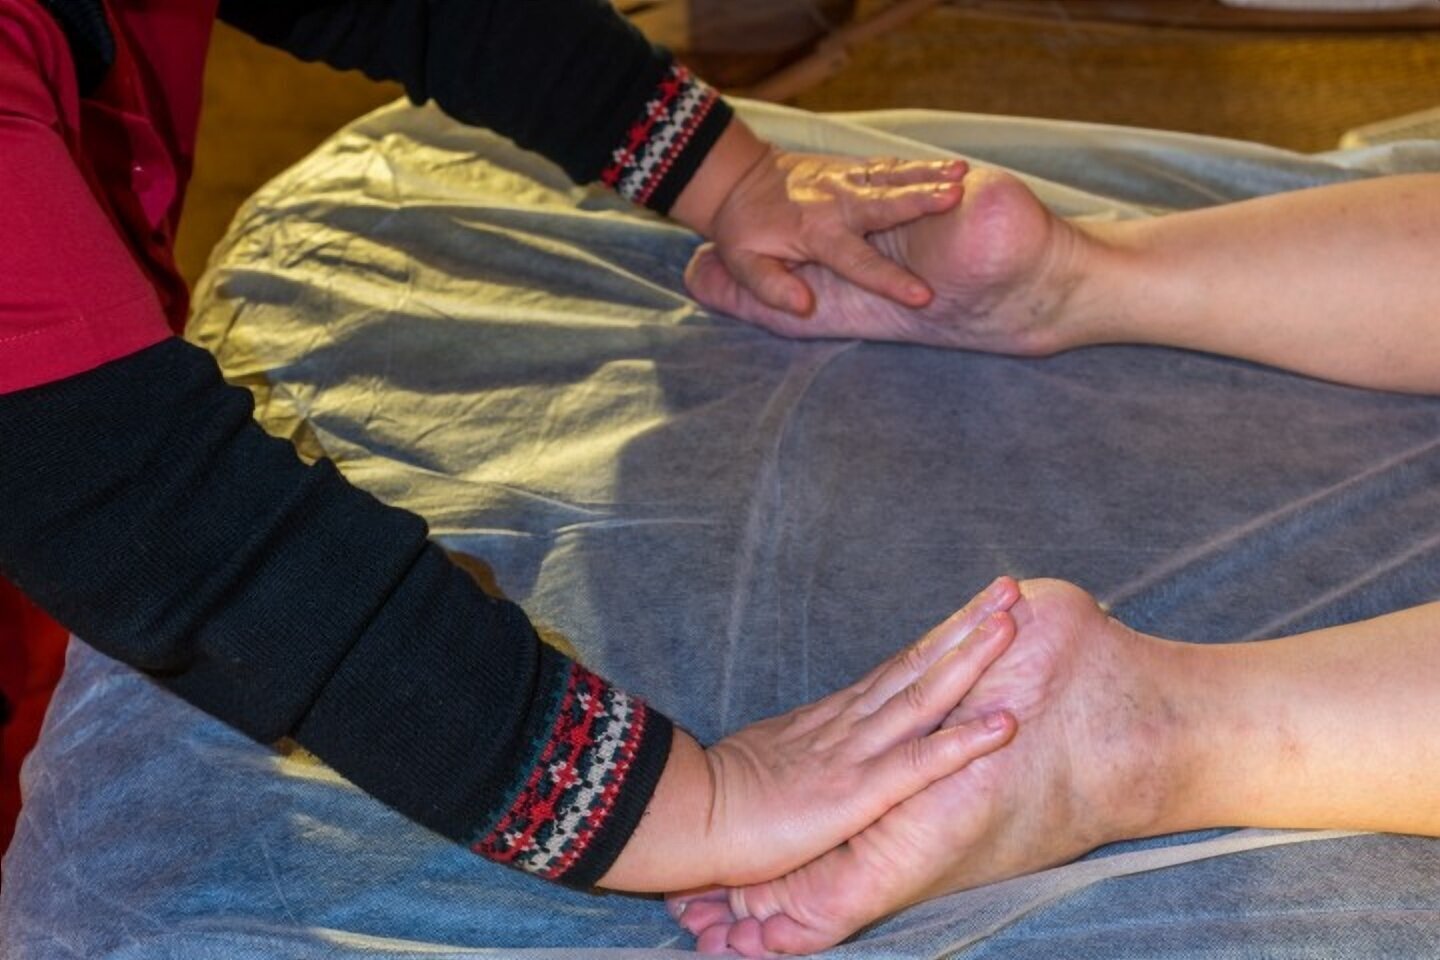 Images Brigitte REBUFFET - Praticien en massage